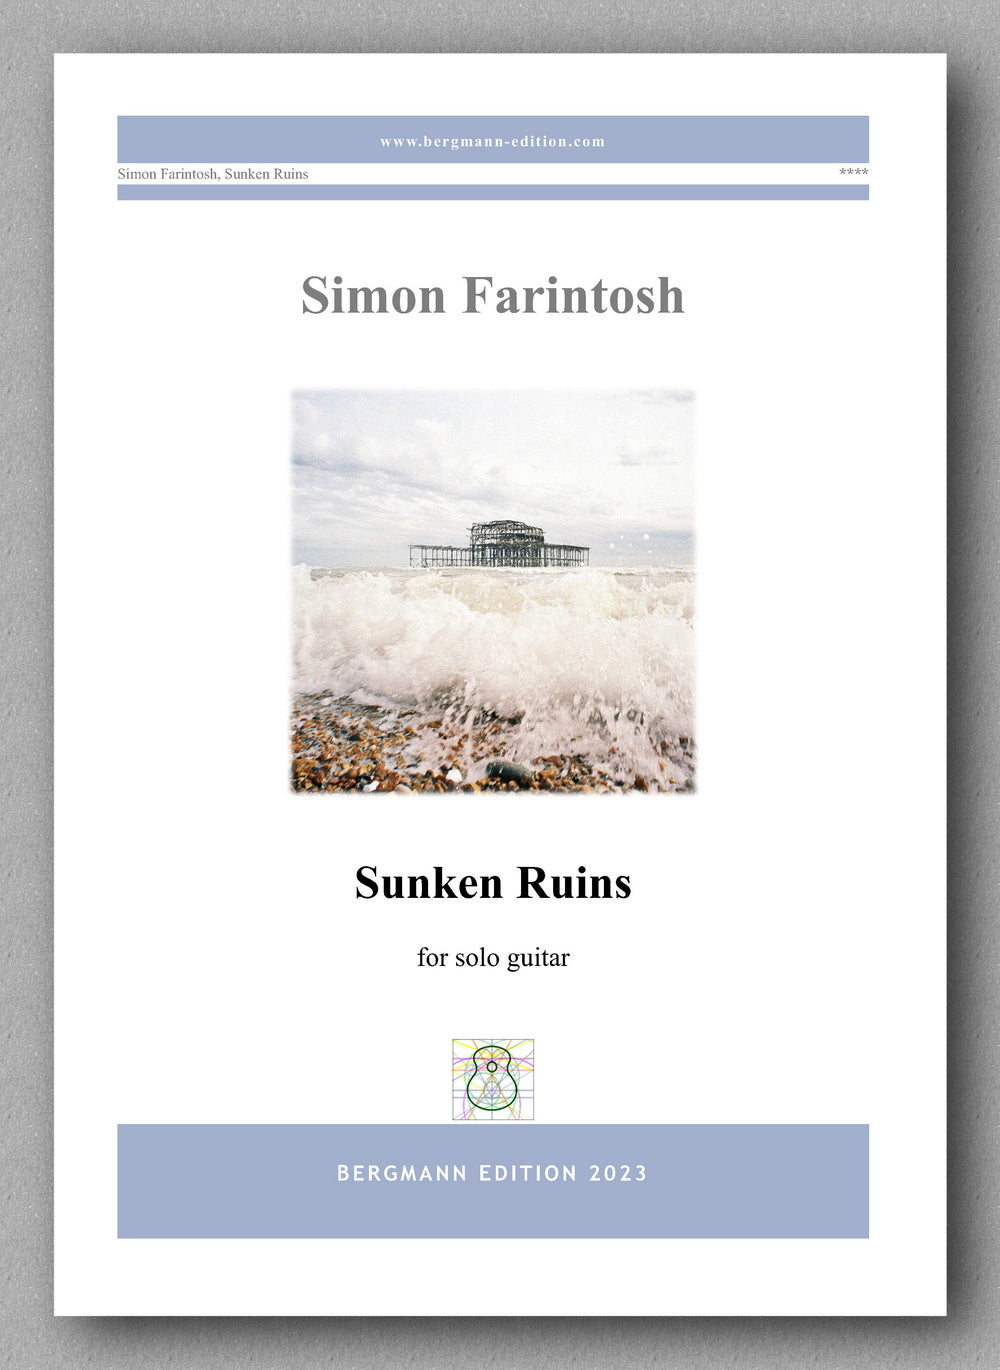 Simon Farintosh, Sunken Ruins - preview of the cover